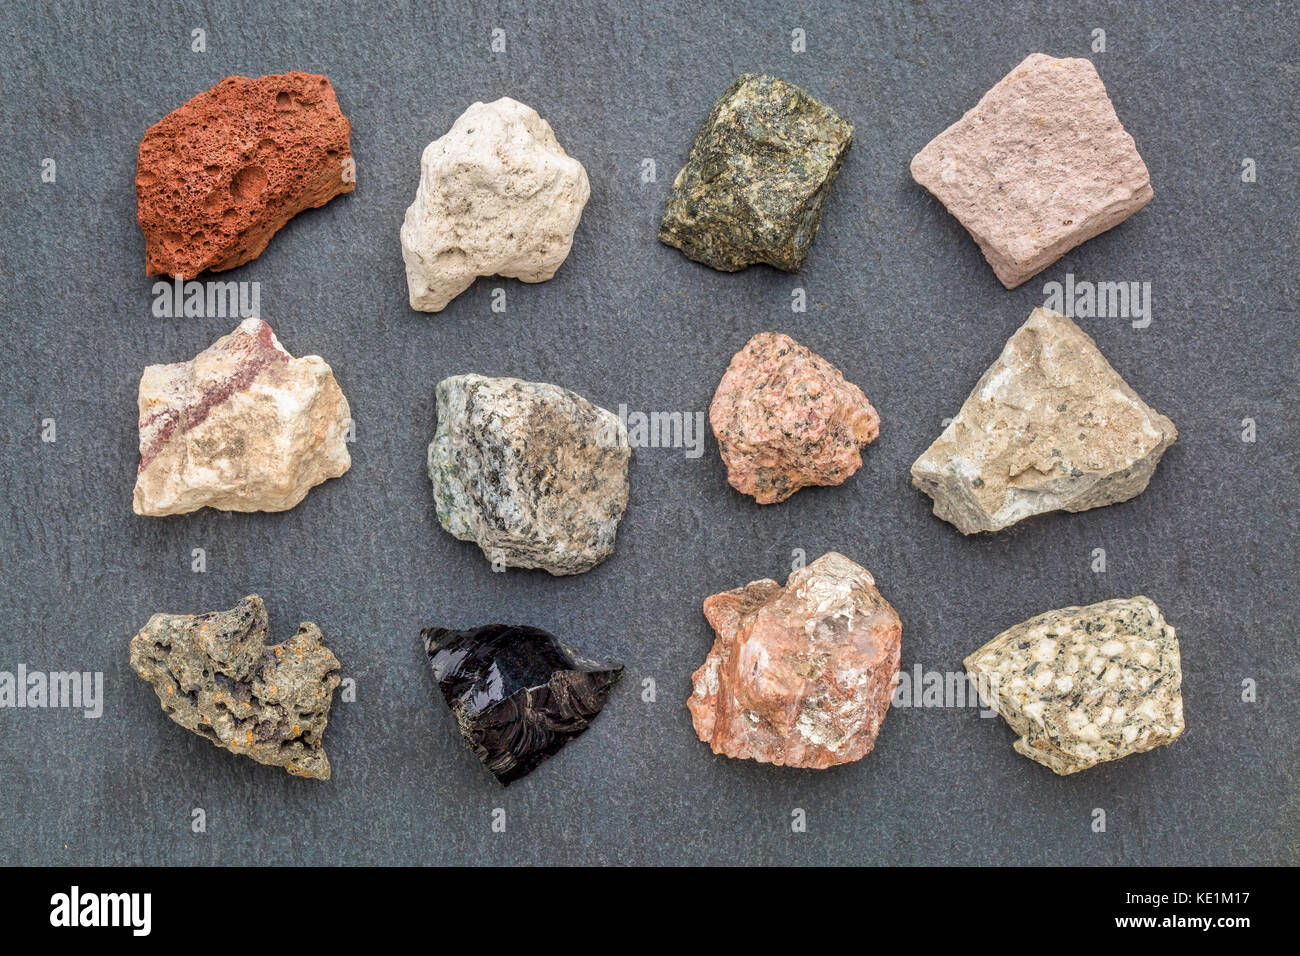 igneous rock geology collection, from top left: scoria, pumice, gabbro, tuff, rhyolite, diorite, granite, andesite, basalt, obsidian,  pegmatite, porp Stock Photo